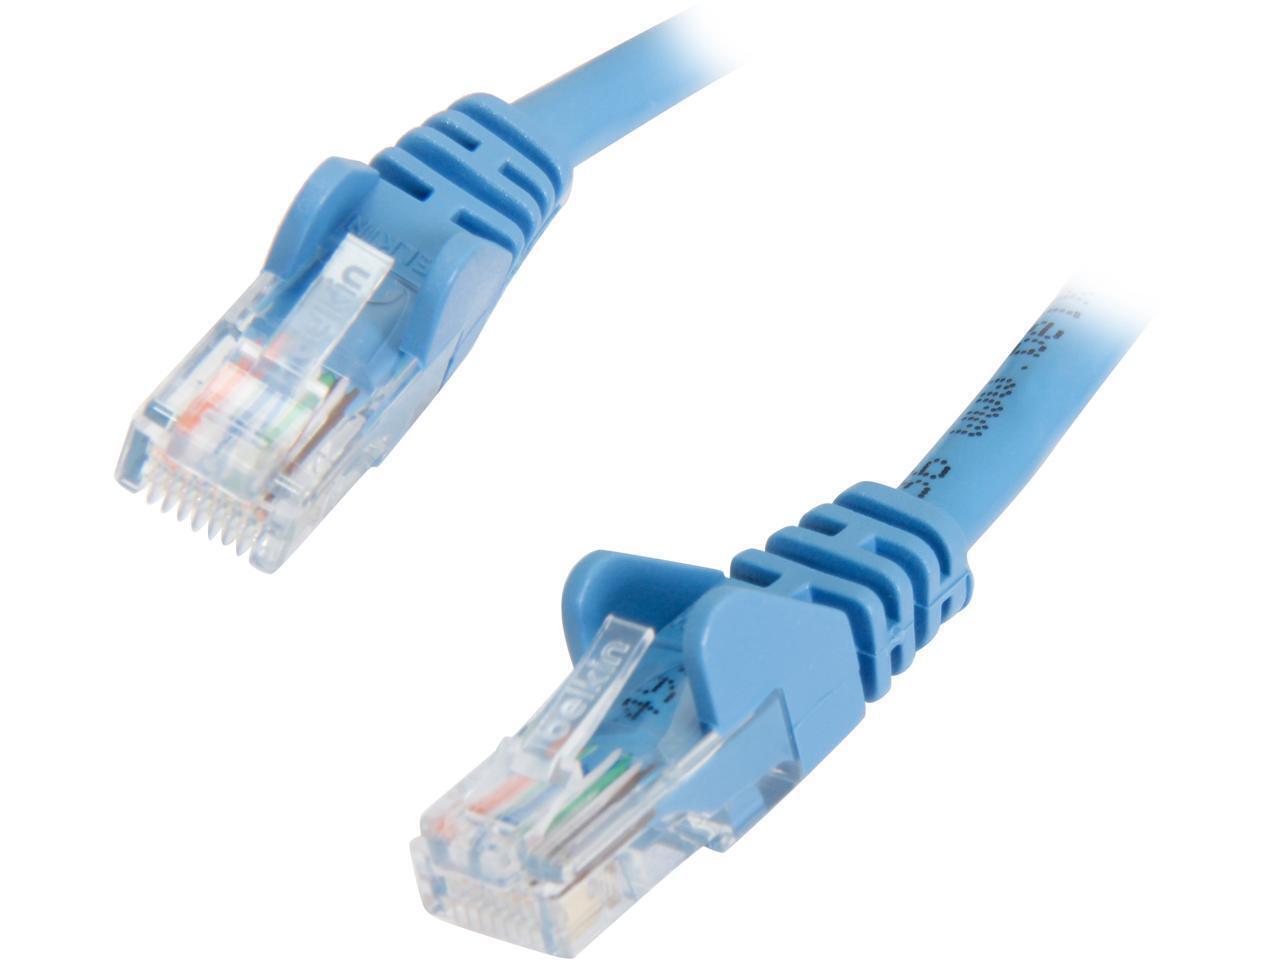 Belkin A3L791-06-BLU-S 6 ft. Cat 5E Blue Network Cable